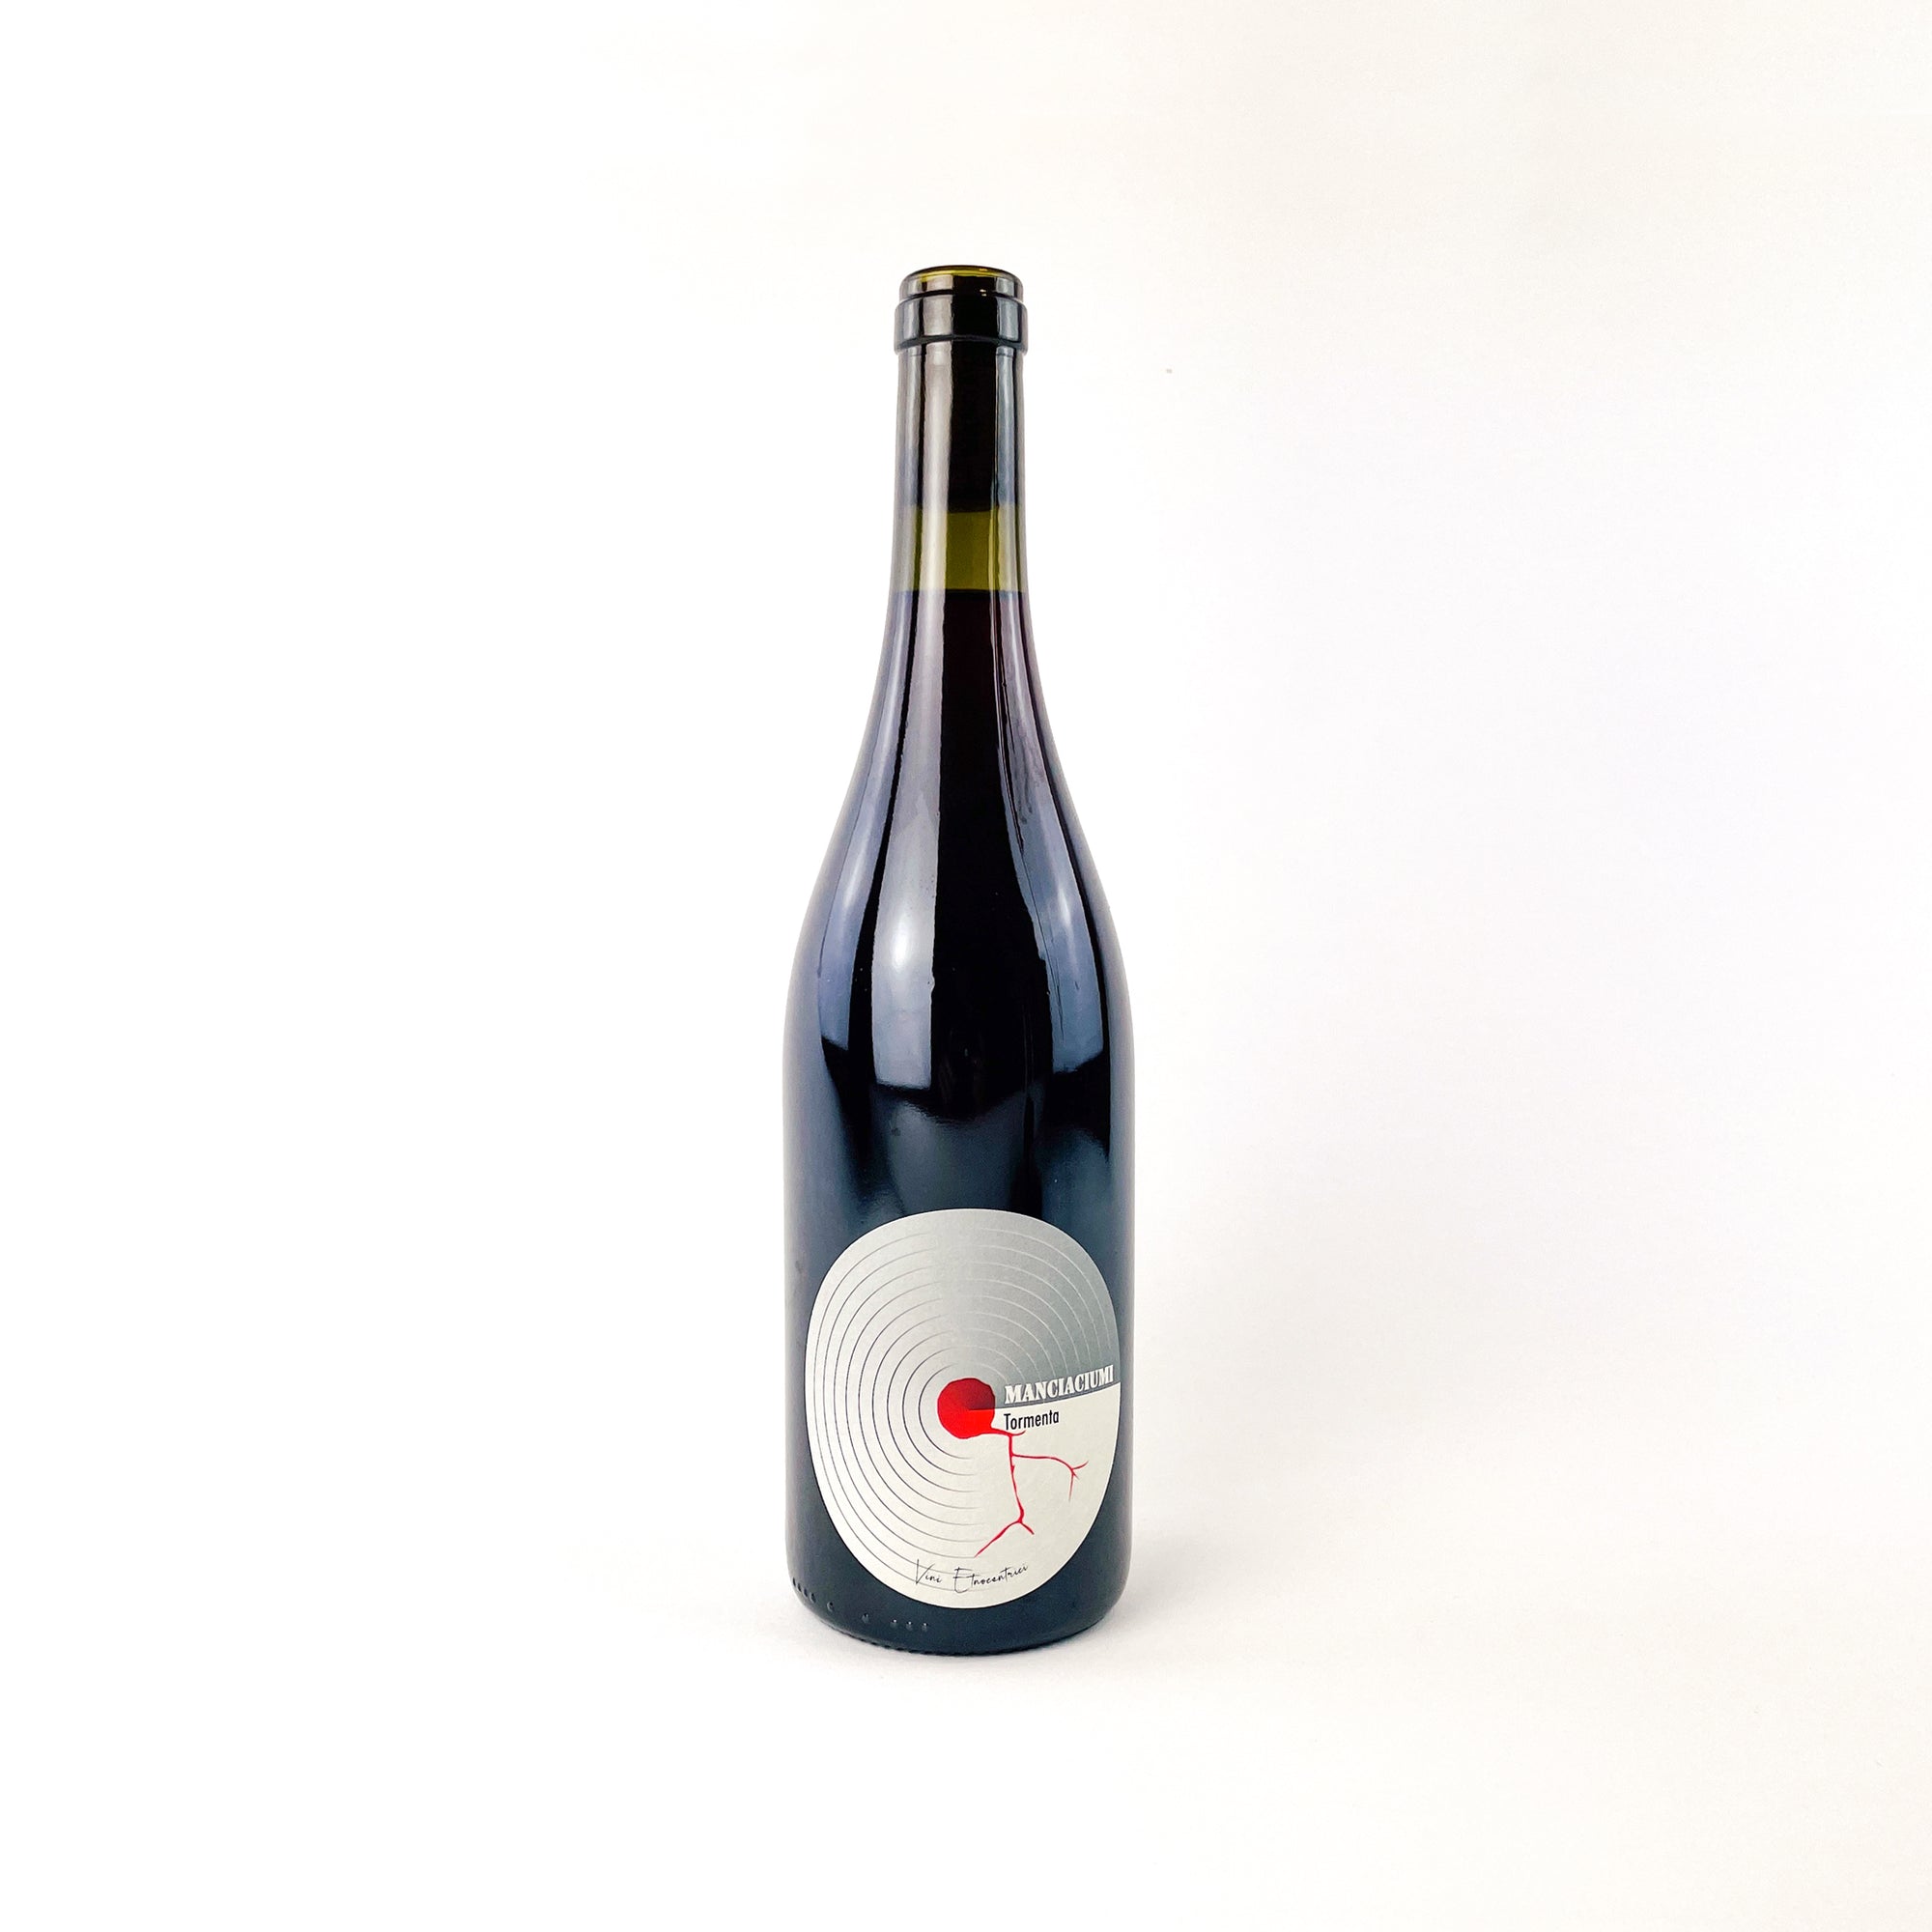 Manciaciumi, Tormenta, red wine bottle, Sicily natural wine